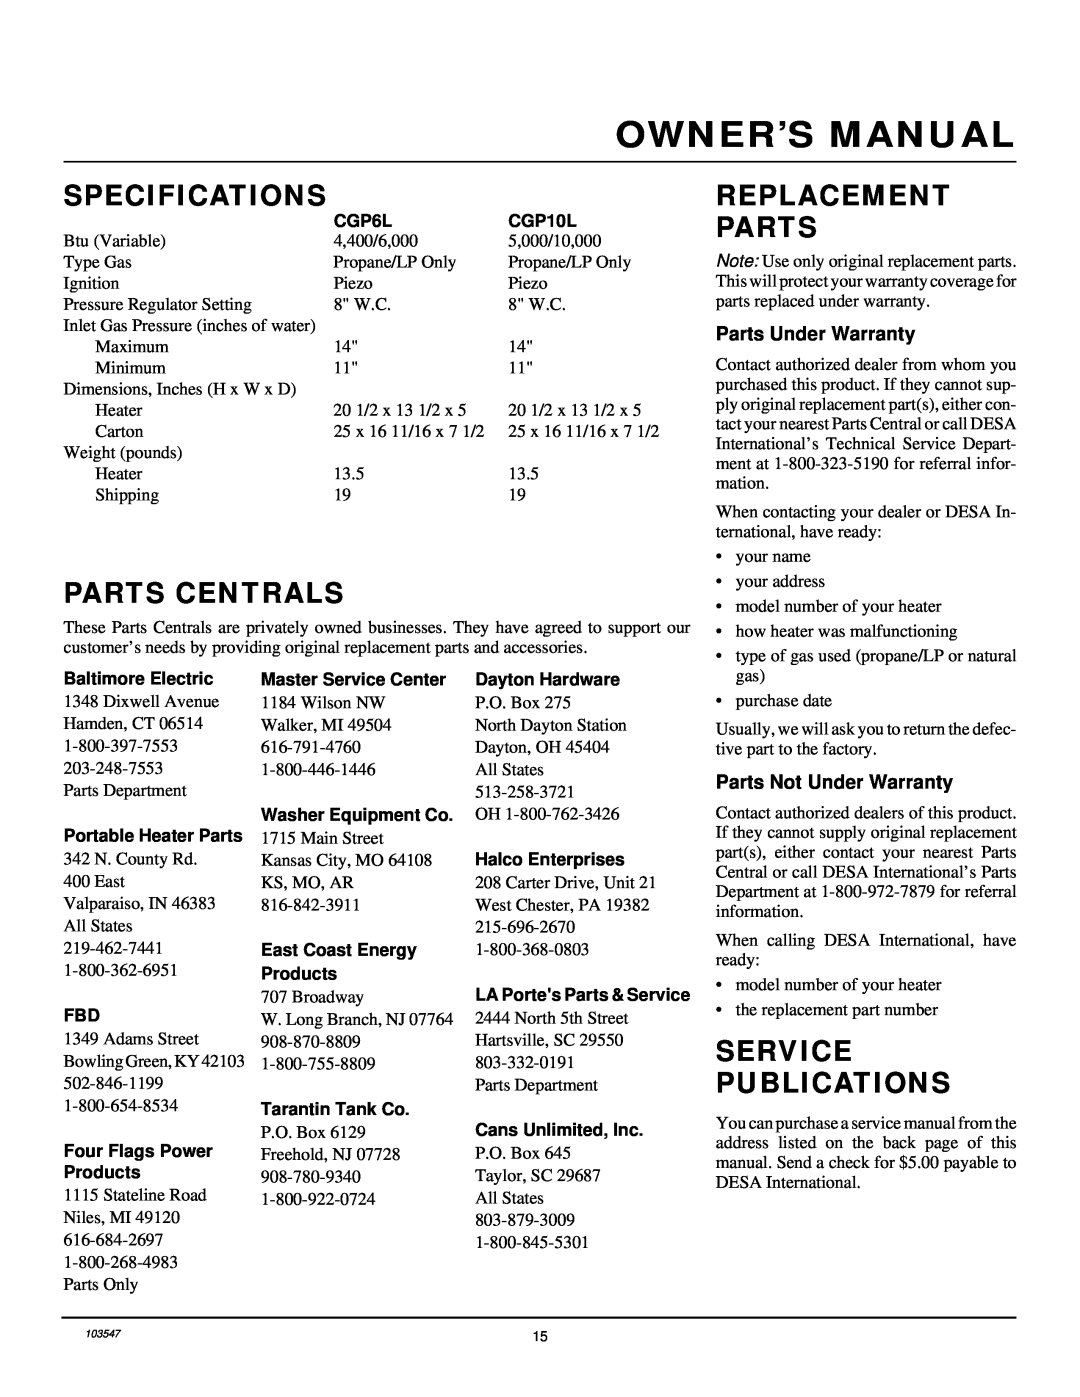 Desa CGP10L, CGP6L installation manual Specifications, Parts Centrals, Replacement Parts, Service Publications 